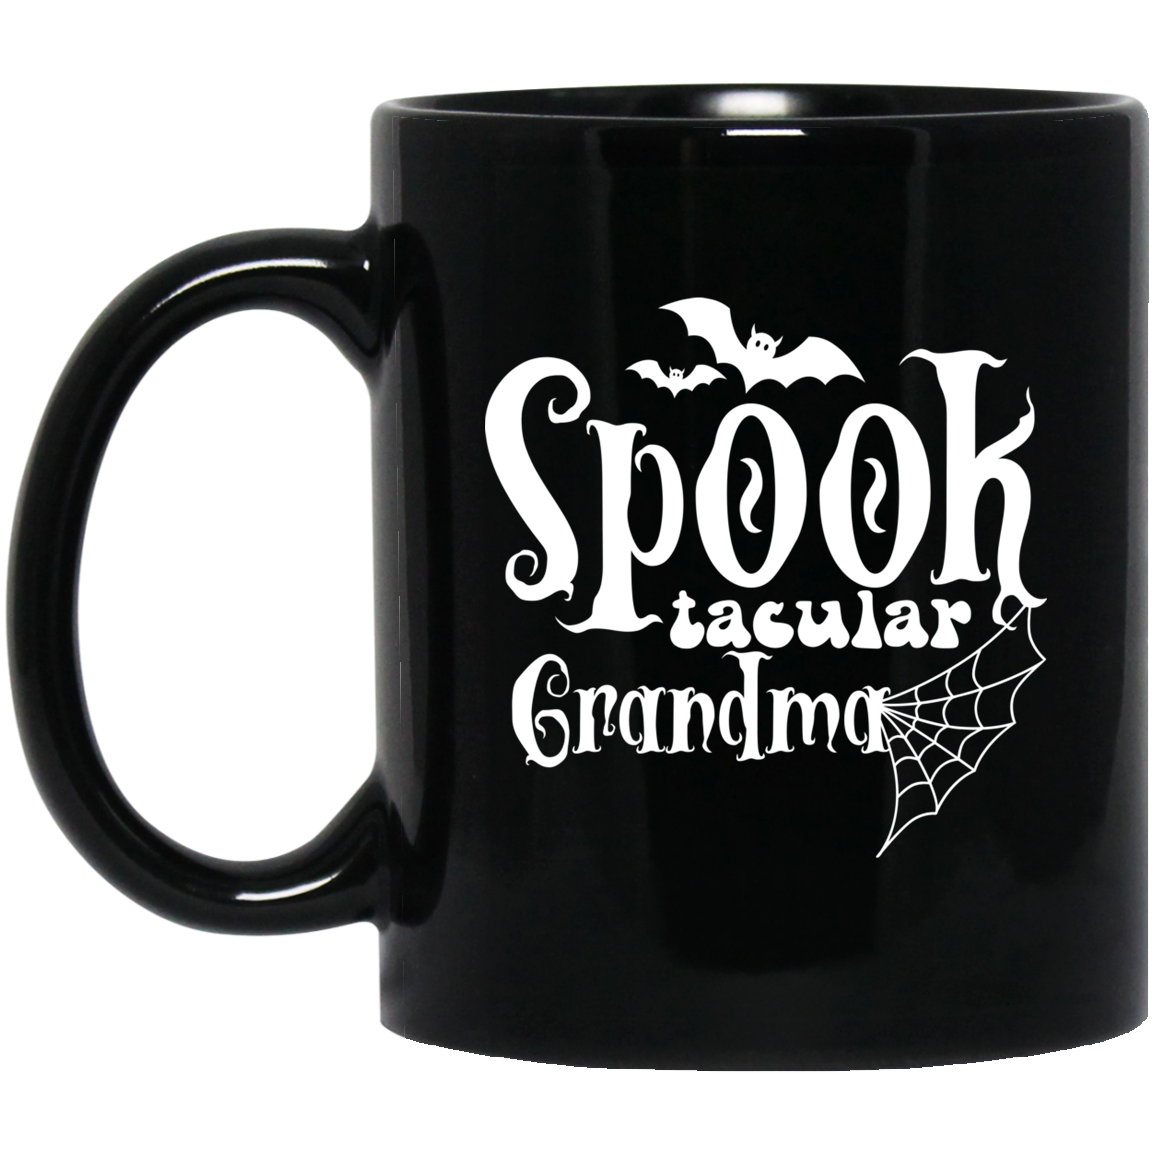 Spooktacular Grandma 11 oz. Black Mug